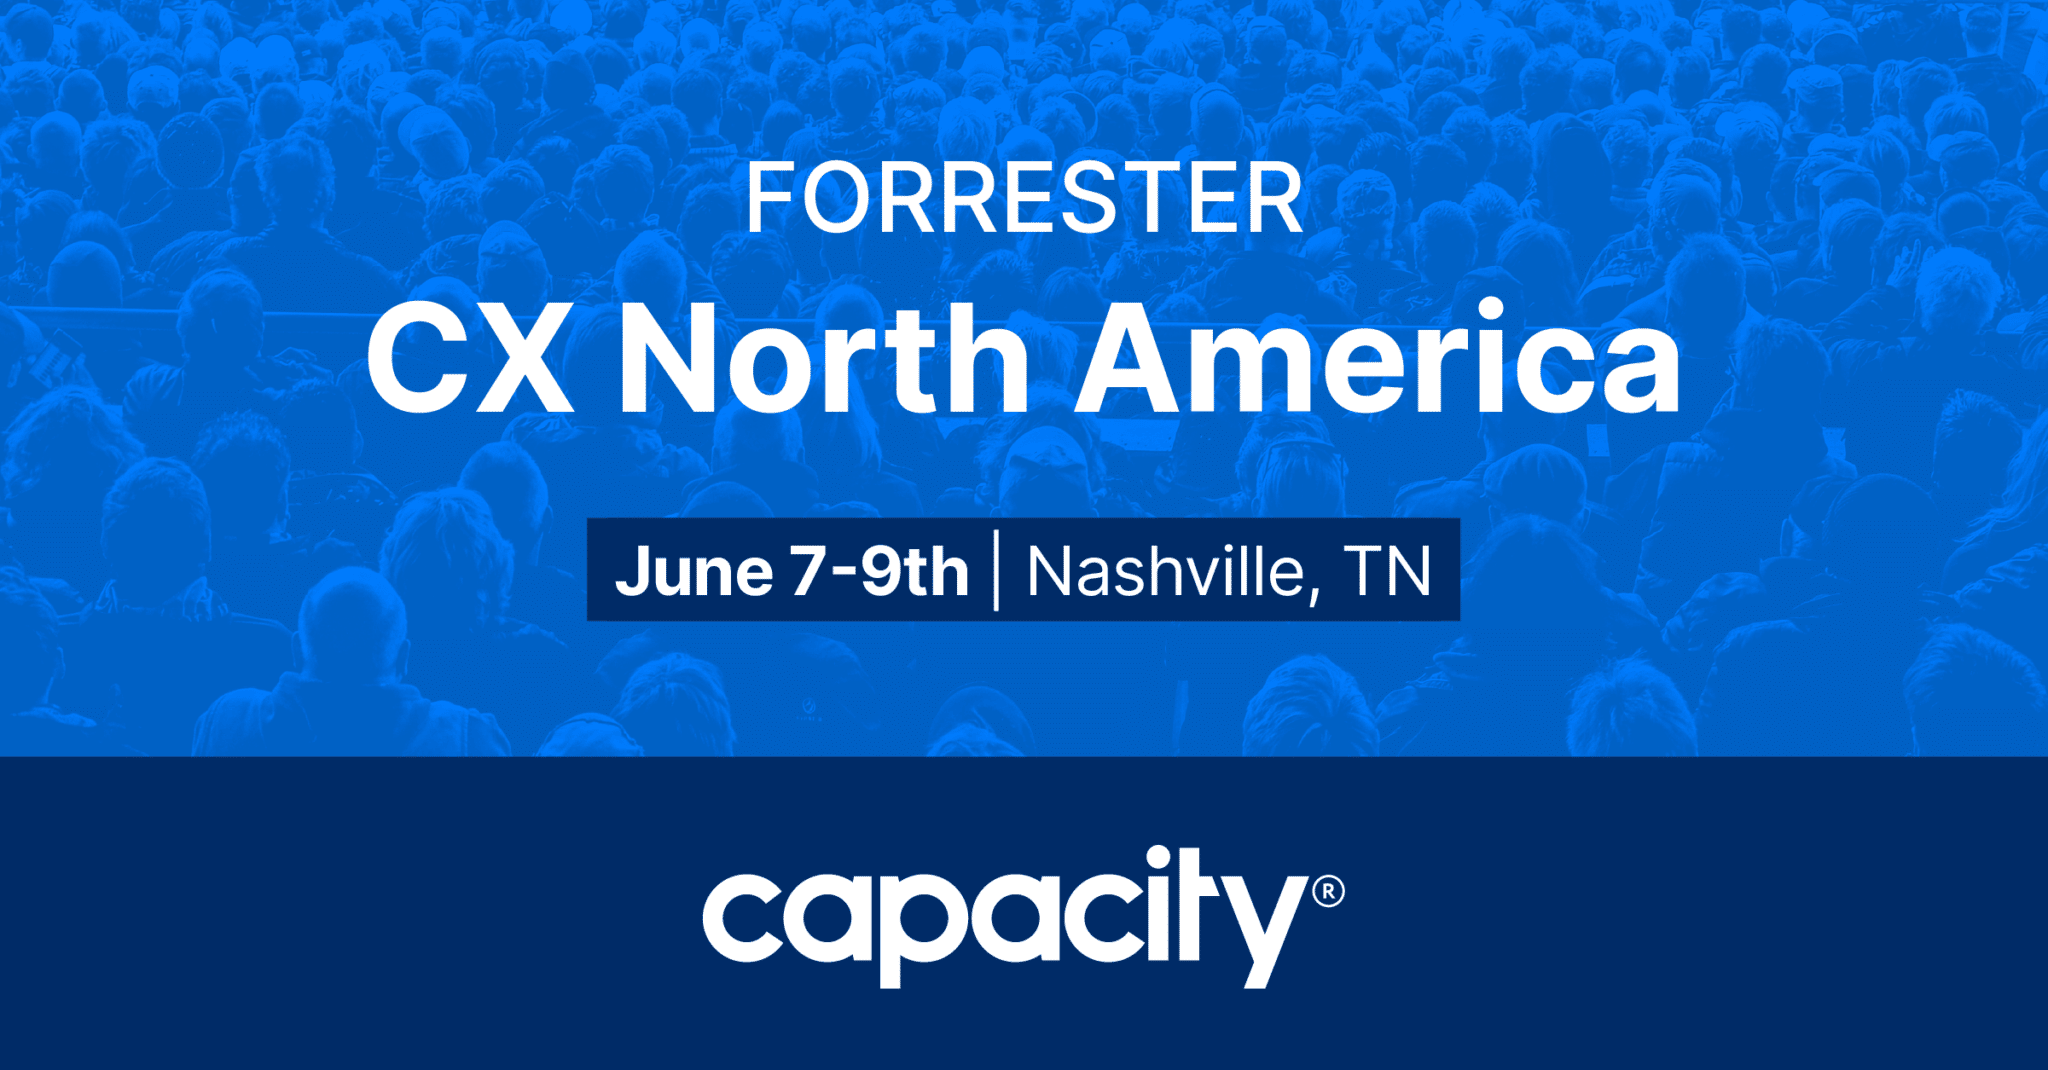 Forrester CX North America Capacity